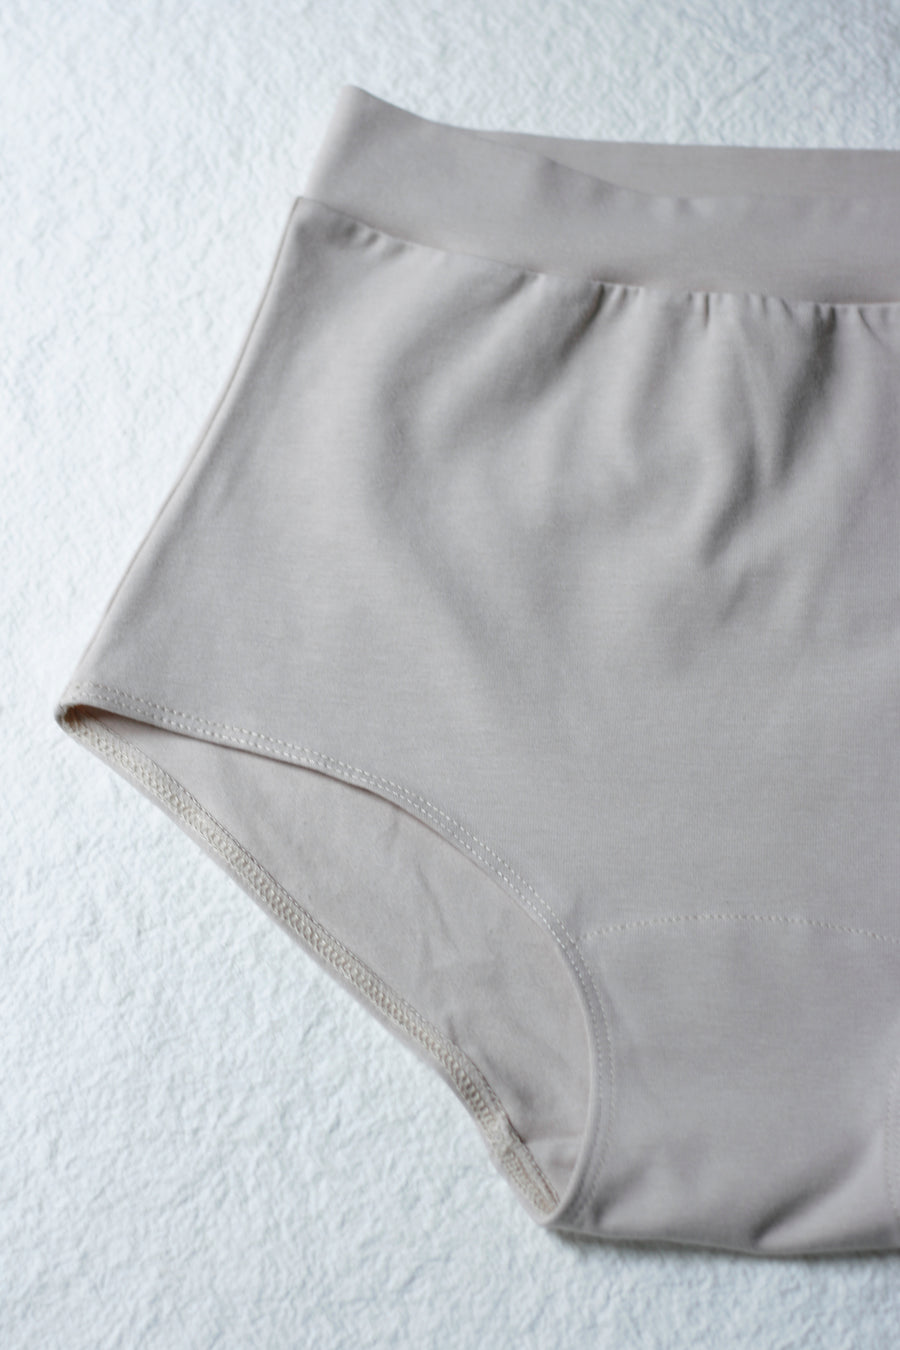 Brief Underwear Hygroscopic Lingerie Low Waist Panties Breathable Cotton